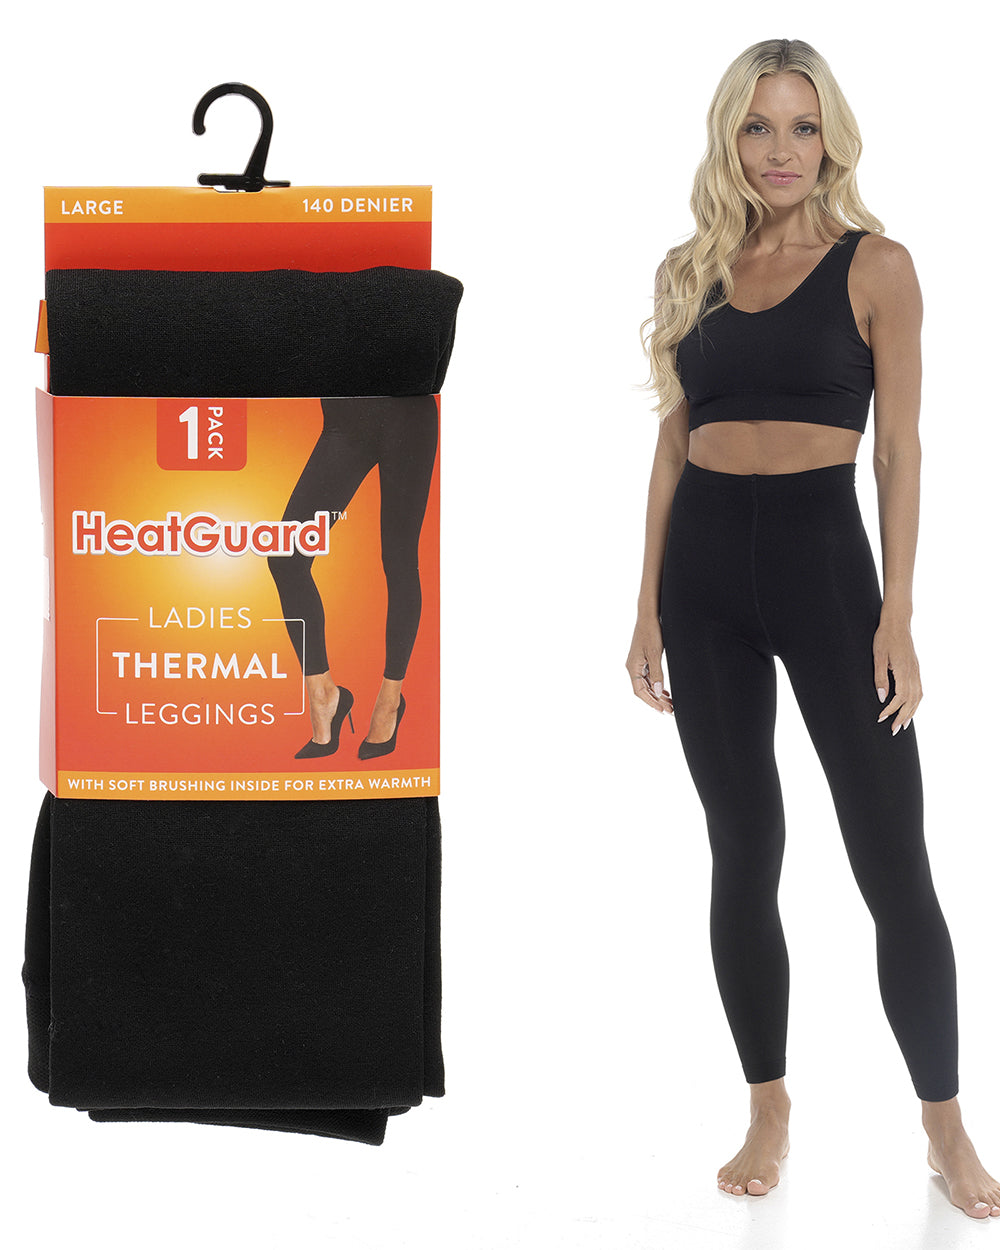 thermal leggings black ladies warm leggings seamless essential small medium large 140 denier